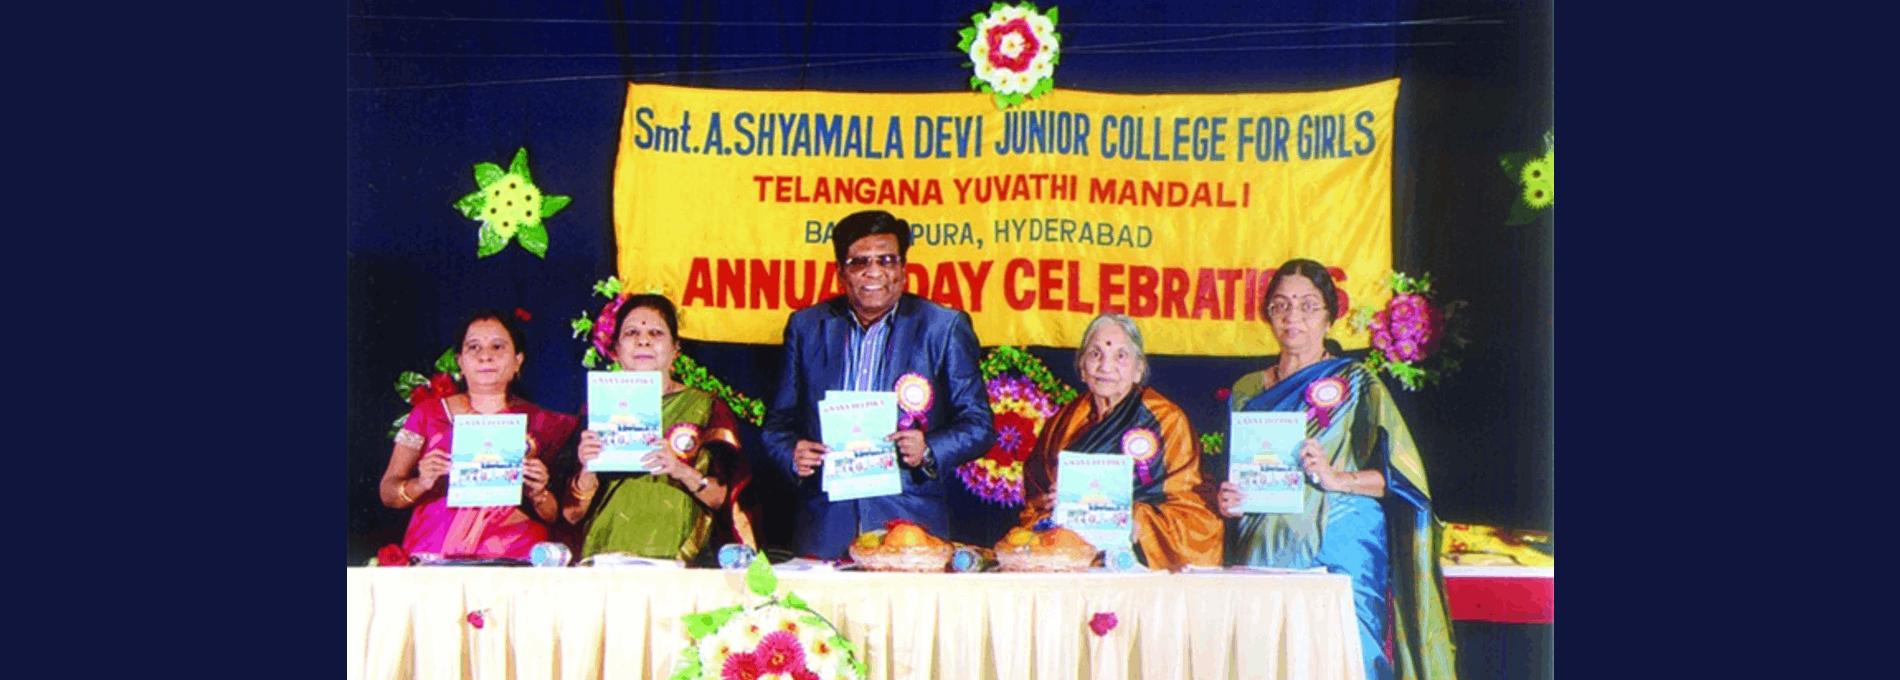 Shyamala Devi Junior College